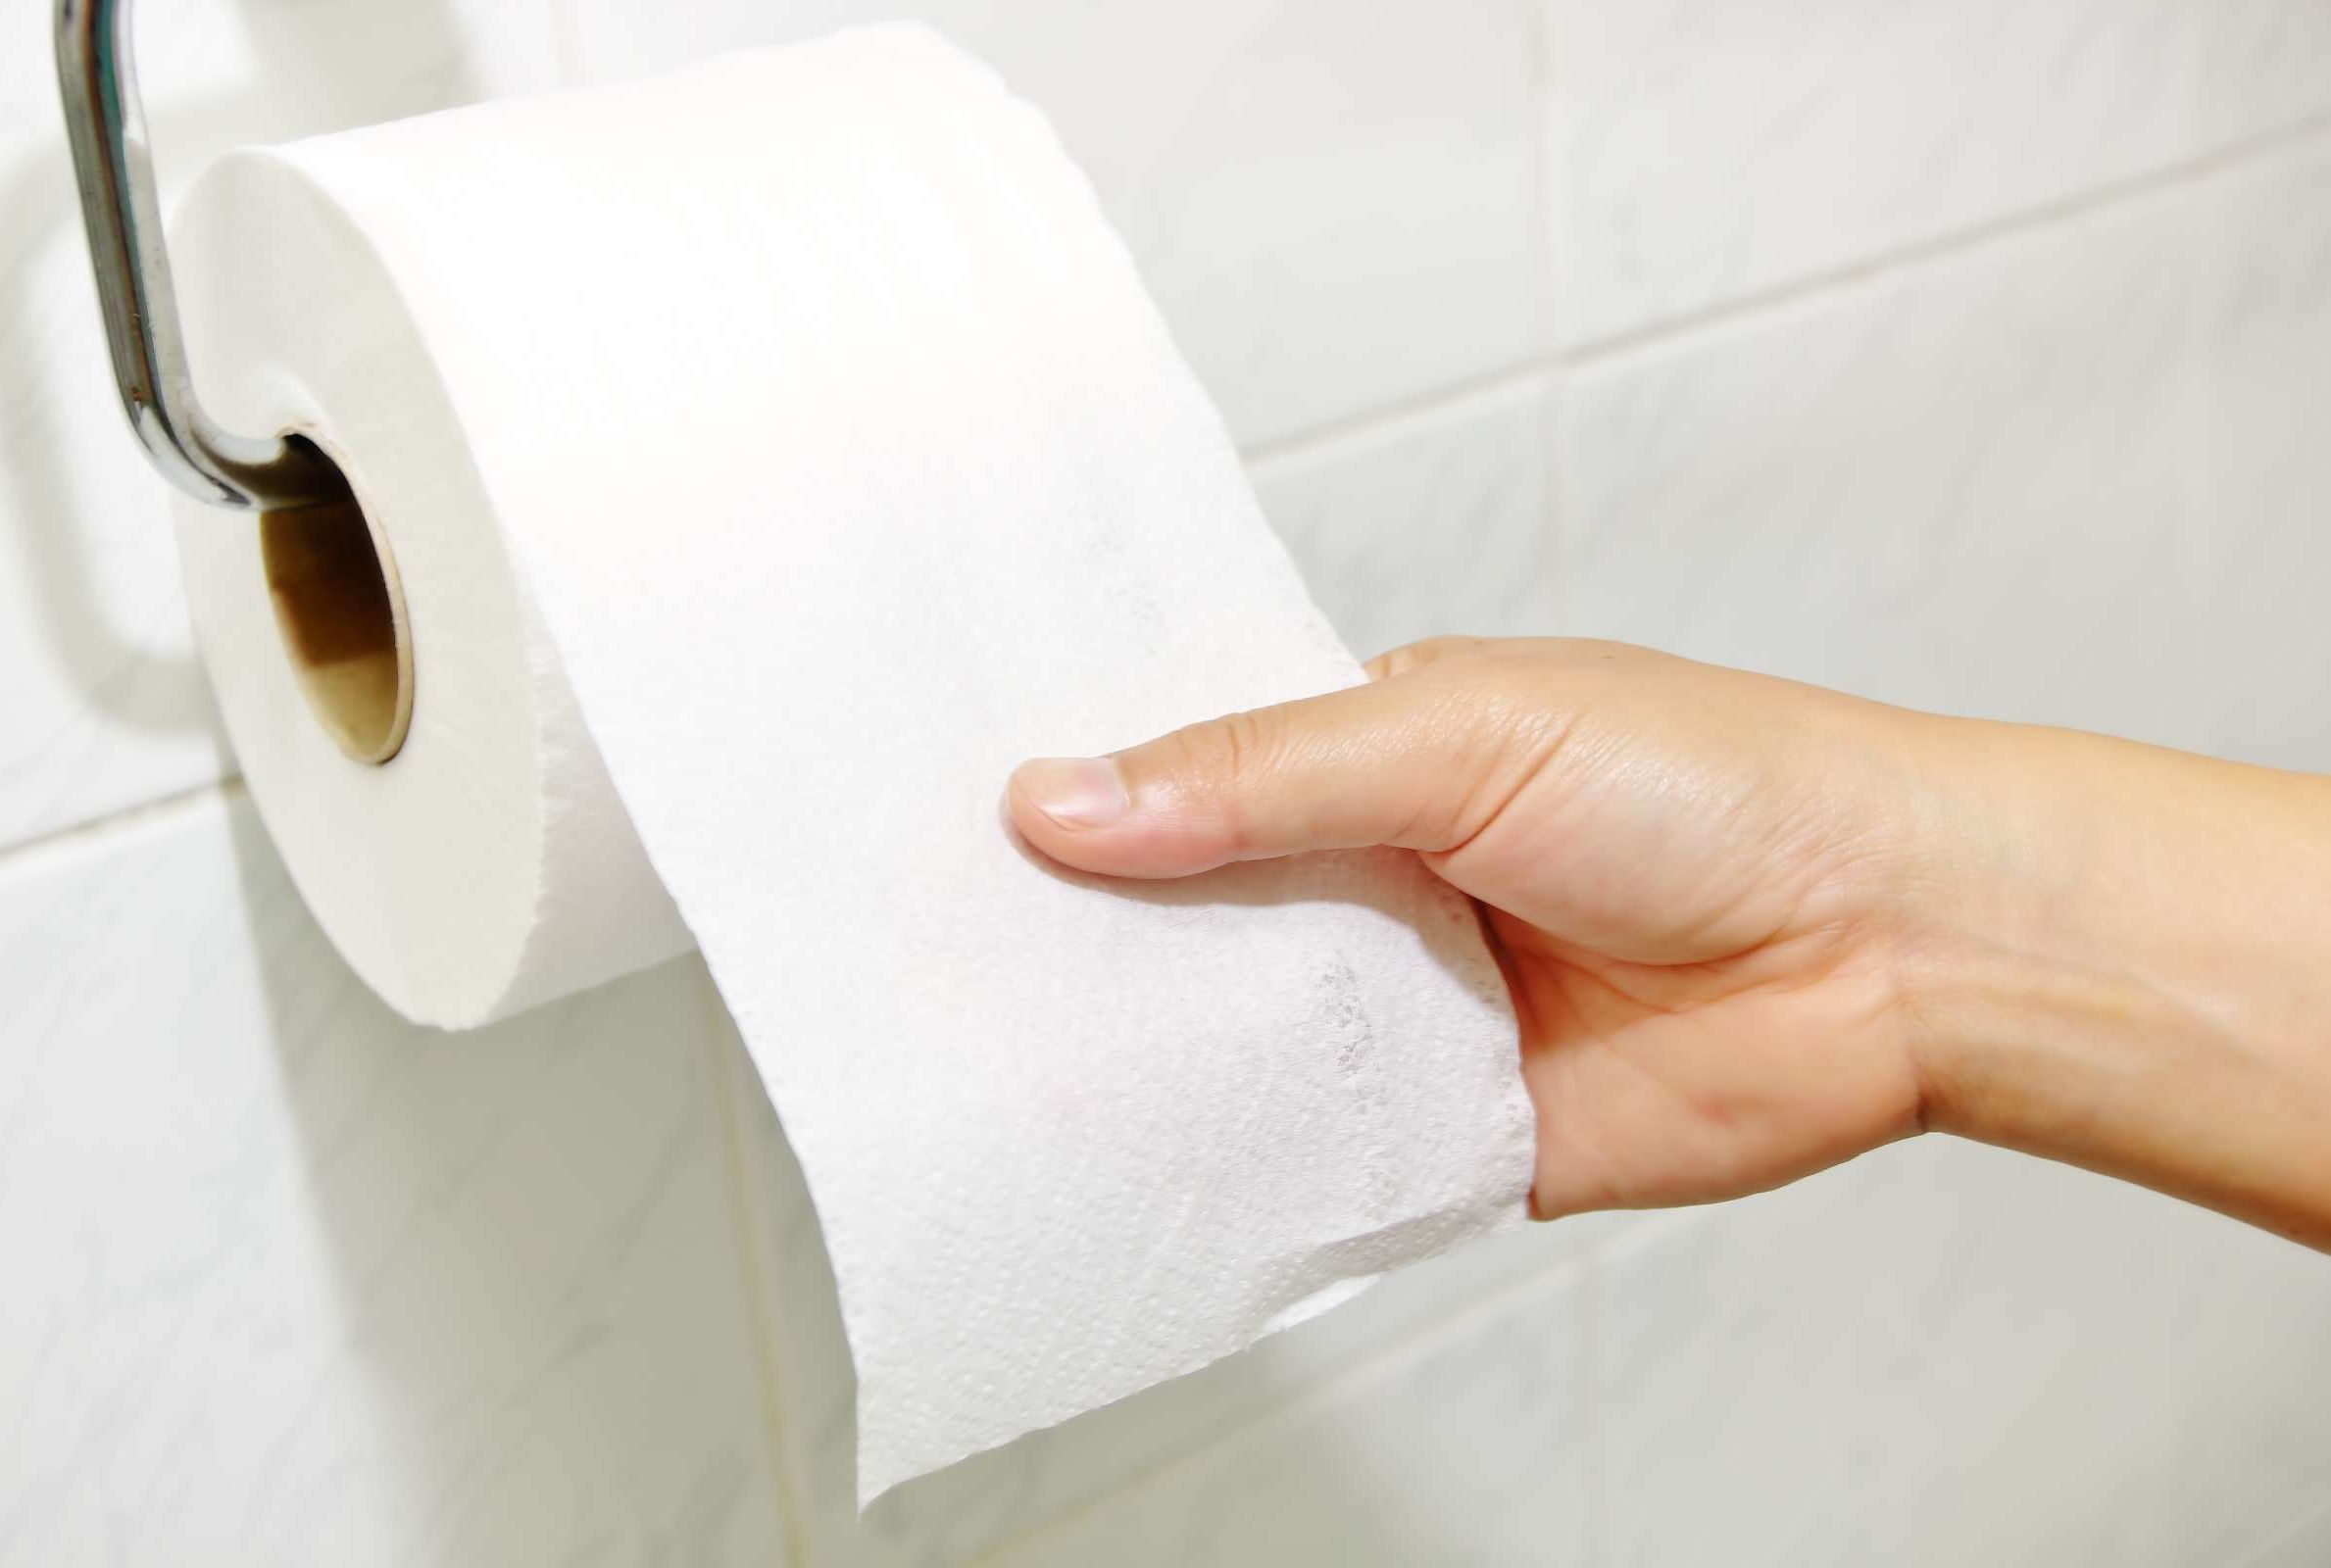 Toilet tissue paper